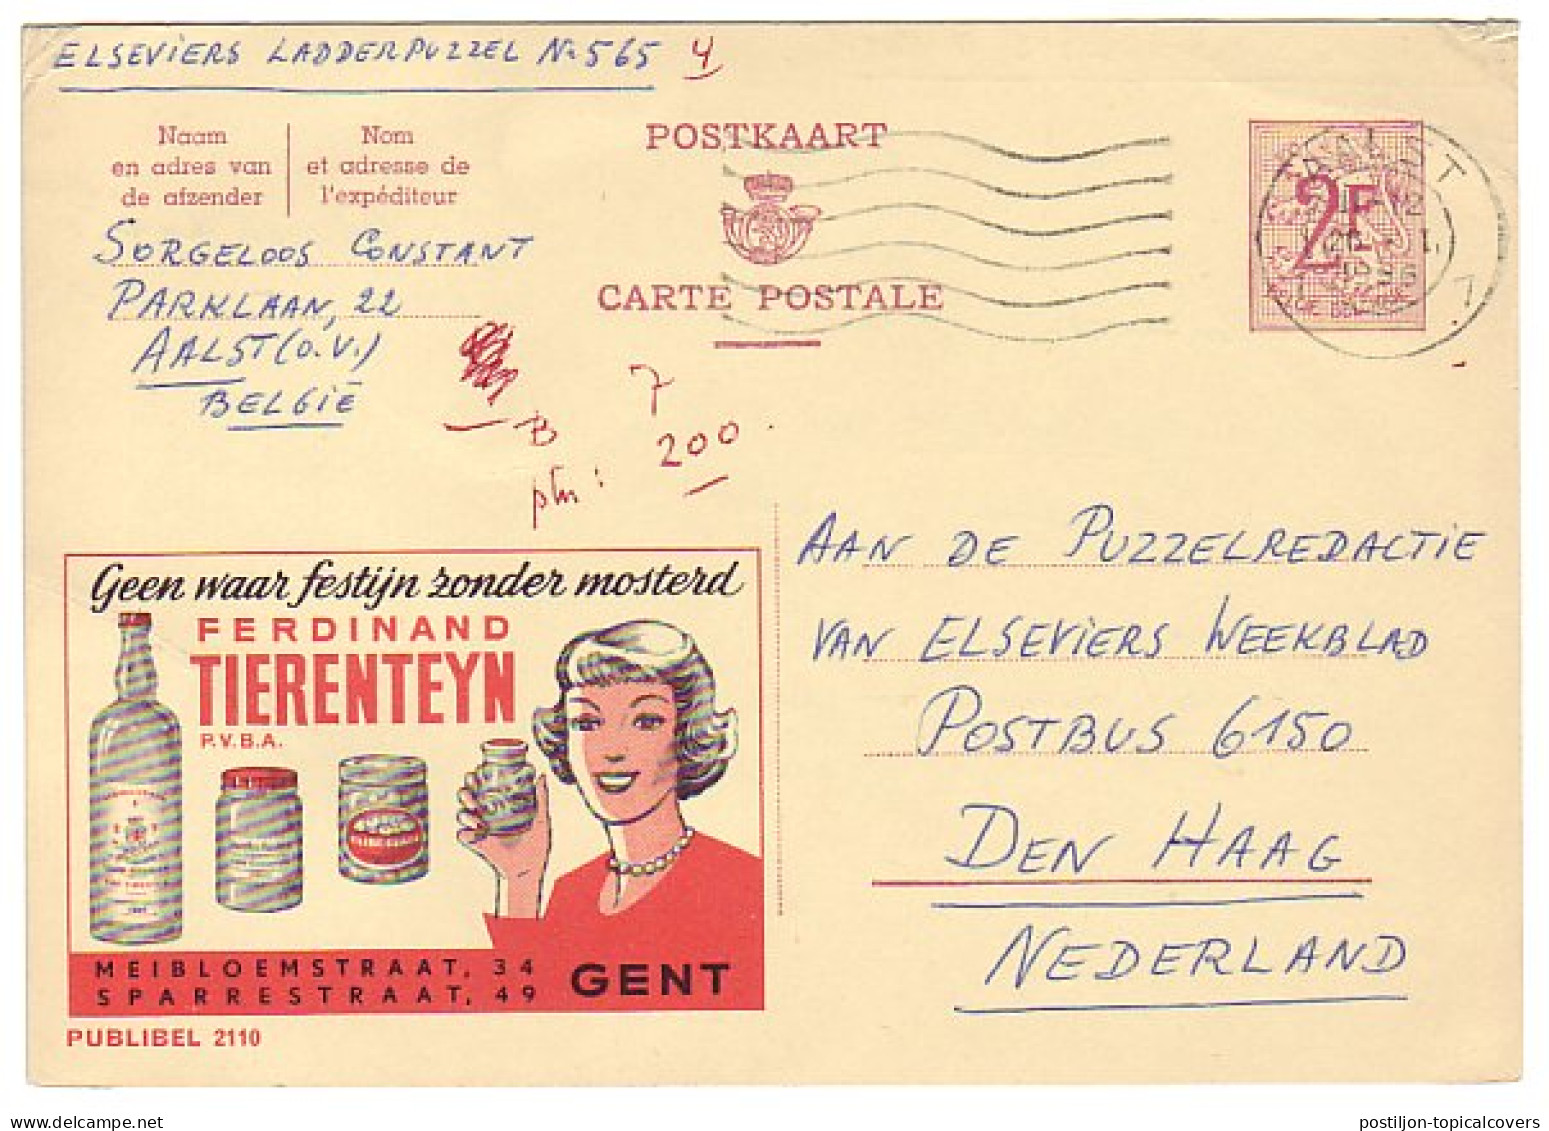 Publibel - Postal Stationery Belgium 1966 Mustard - Alimentación